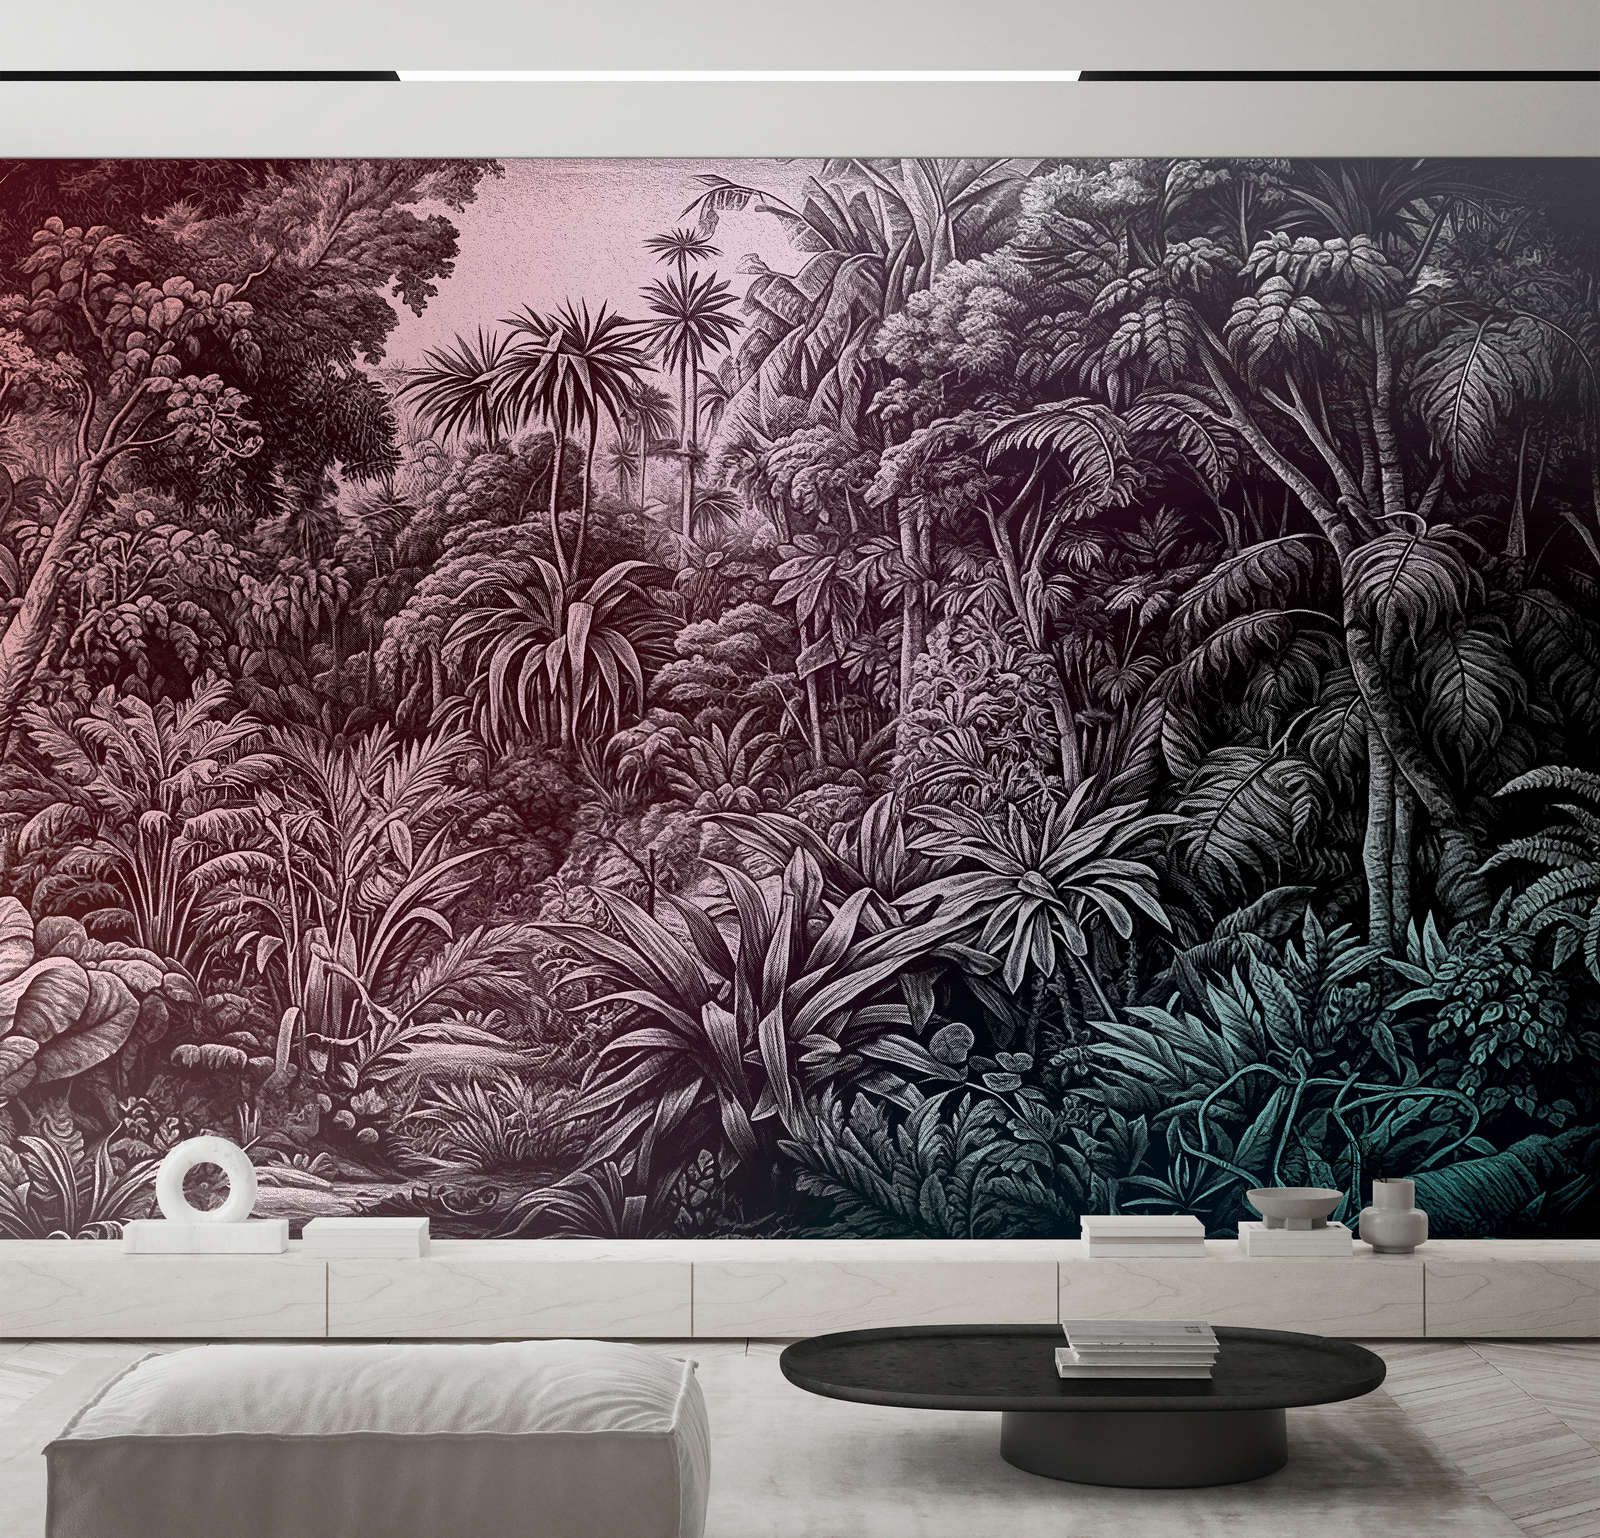             Photo wallpaper »livia« - Jungle design with colour gradient - Purple to dark green | Smooth, slightly shiny premium non-woven fabric
        